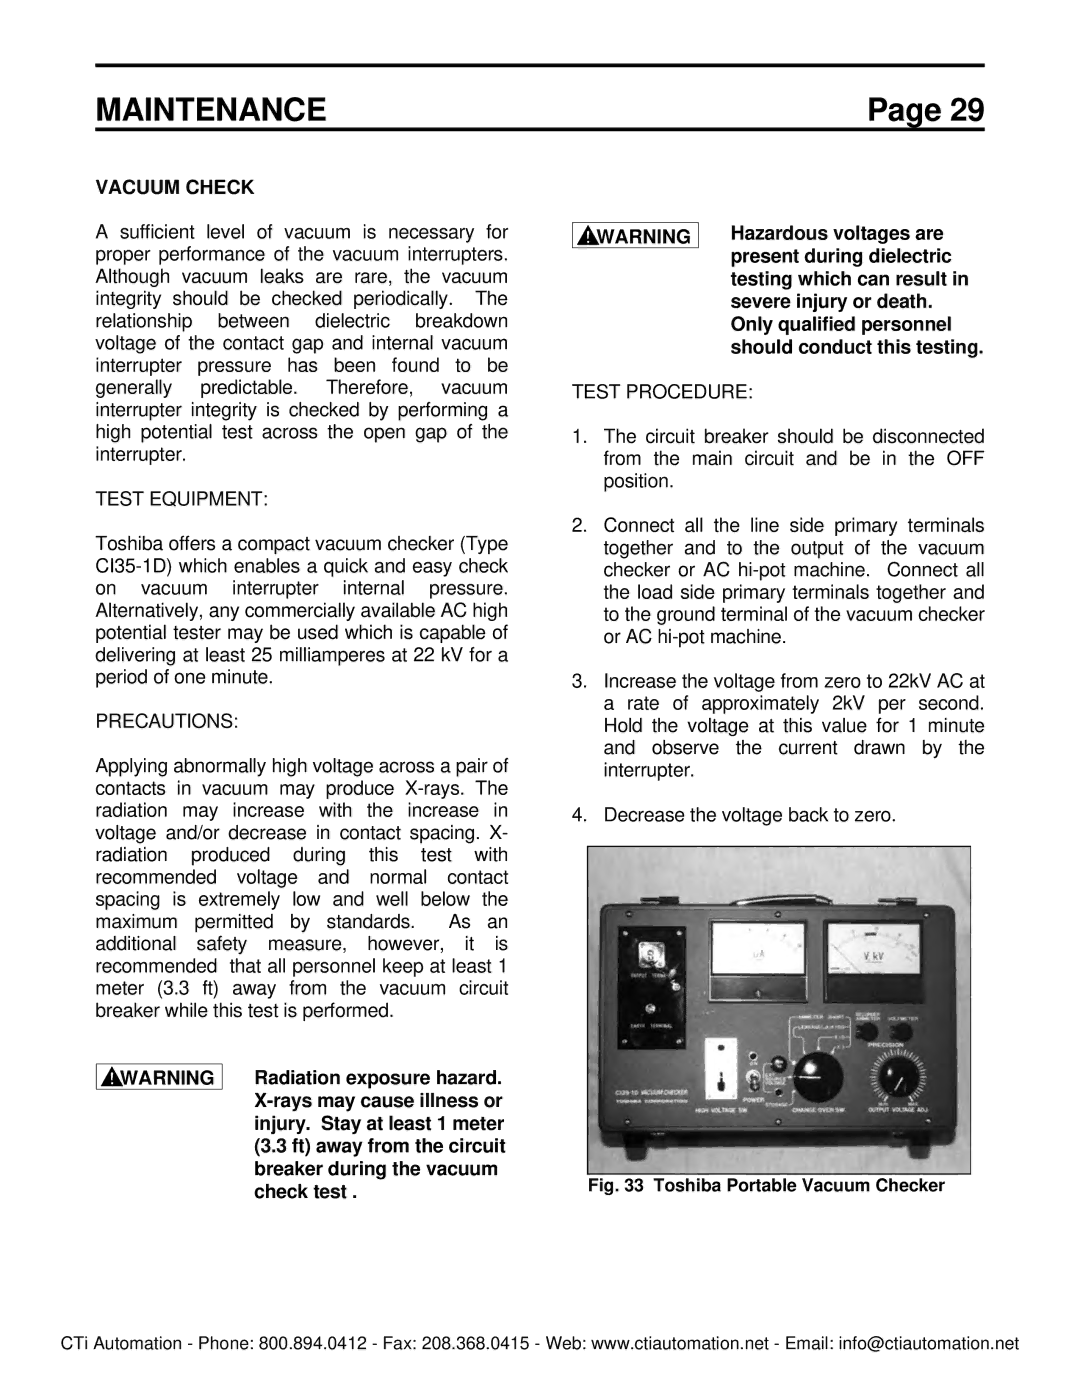 Toshiba HV6FS-MLD instruction manual Vacuum Check, Test Equipment, Precautions, Test Procedure 